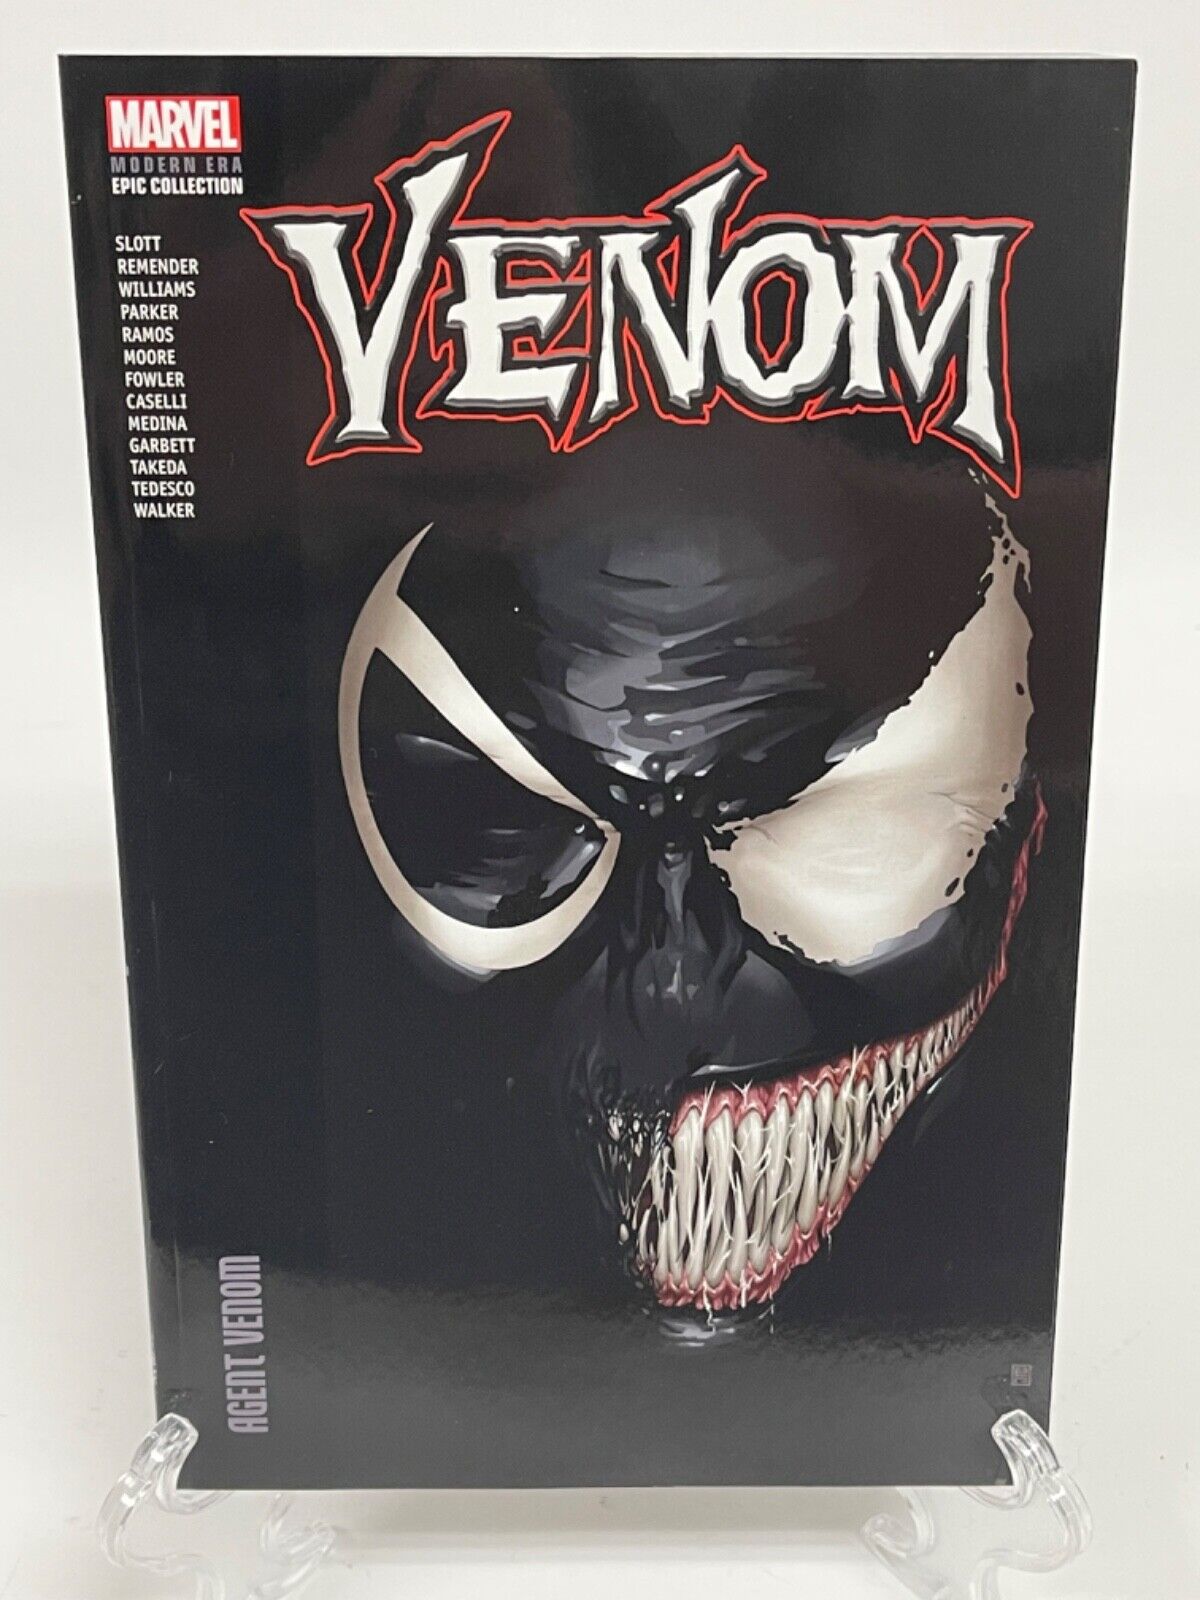 Venom Modern Era Epic Collection Vol 4 Agent Venom New Marvel Comics TPB